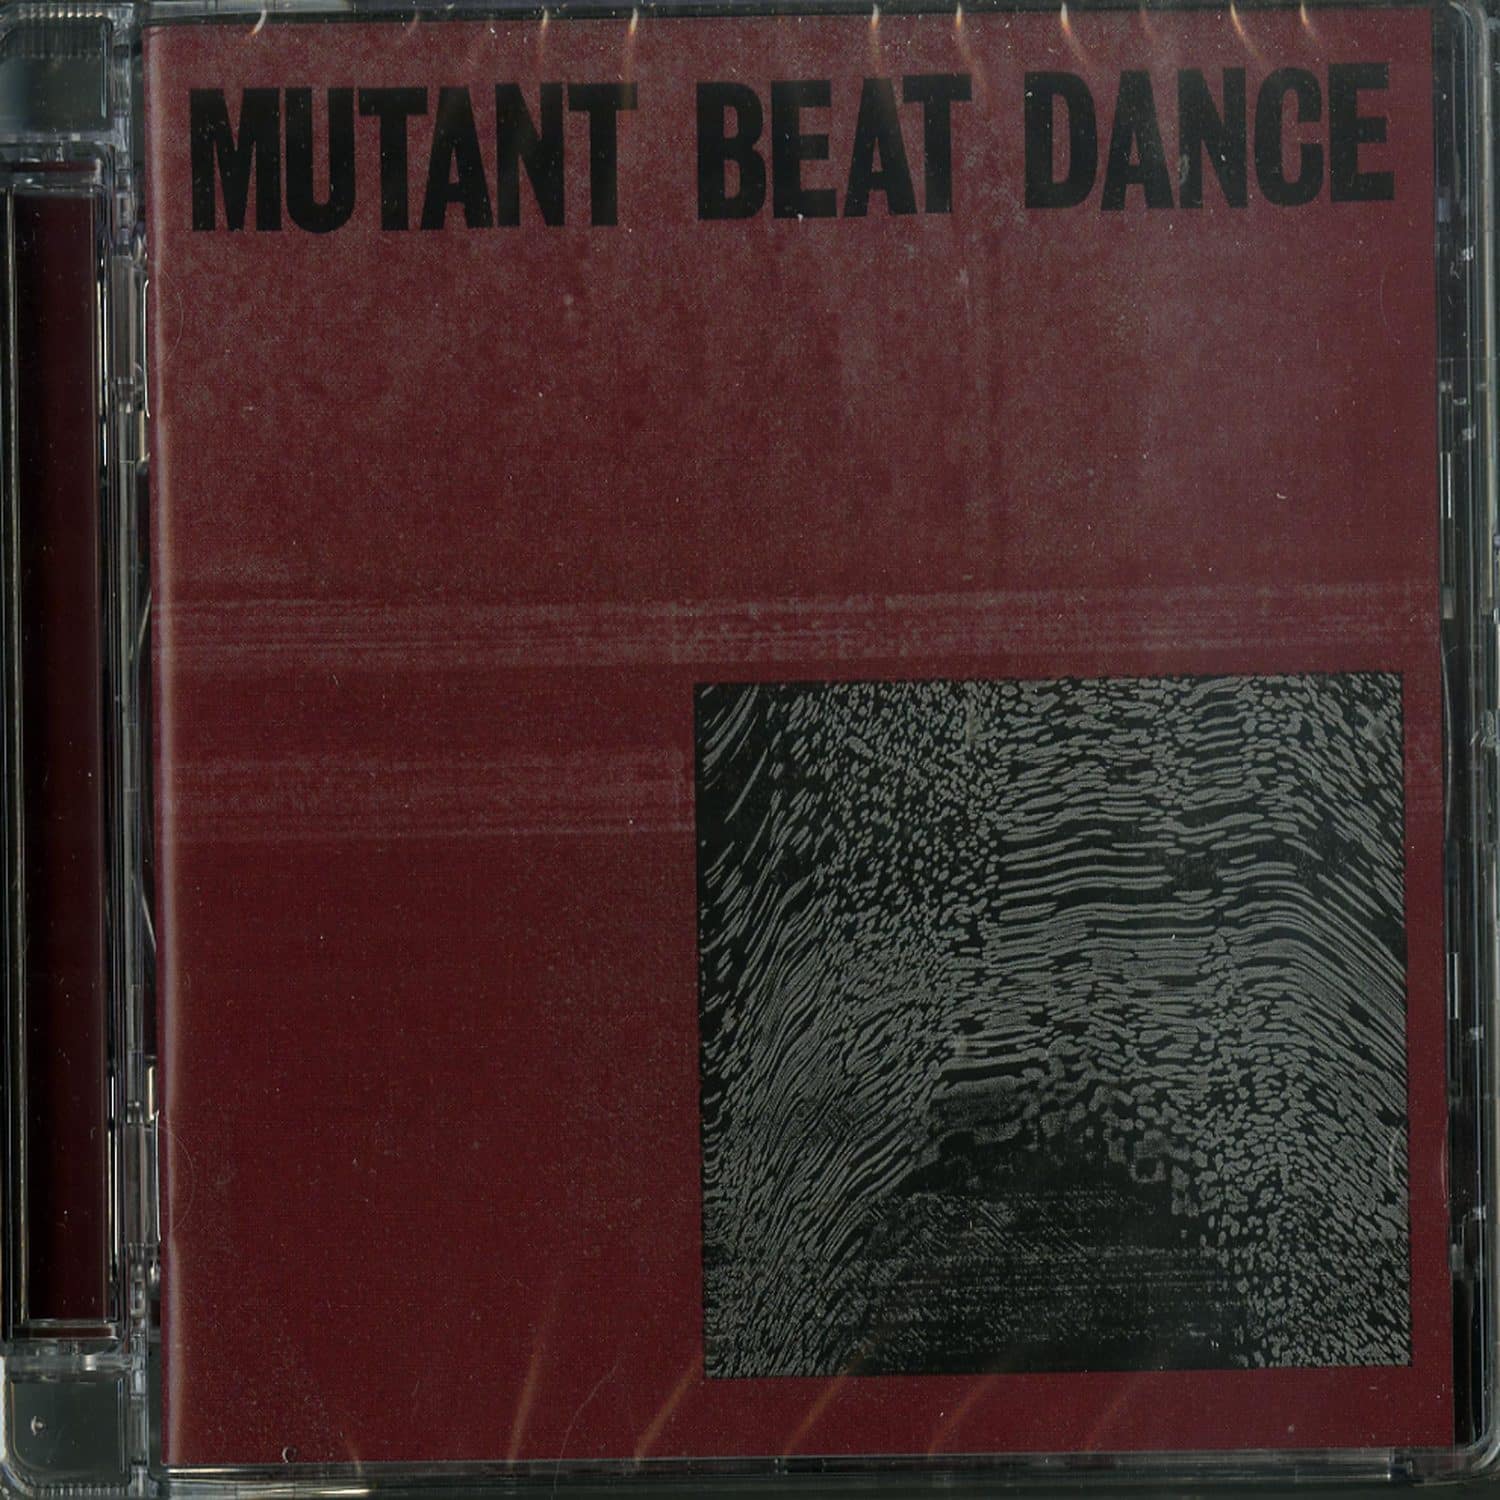 Mutant Beat Dance - S/T 